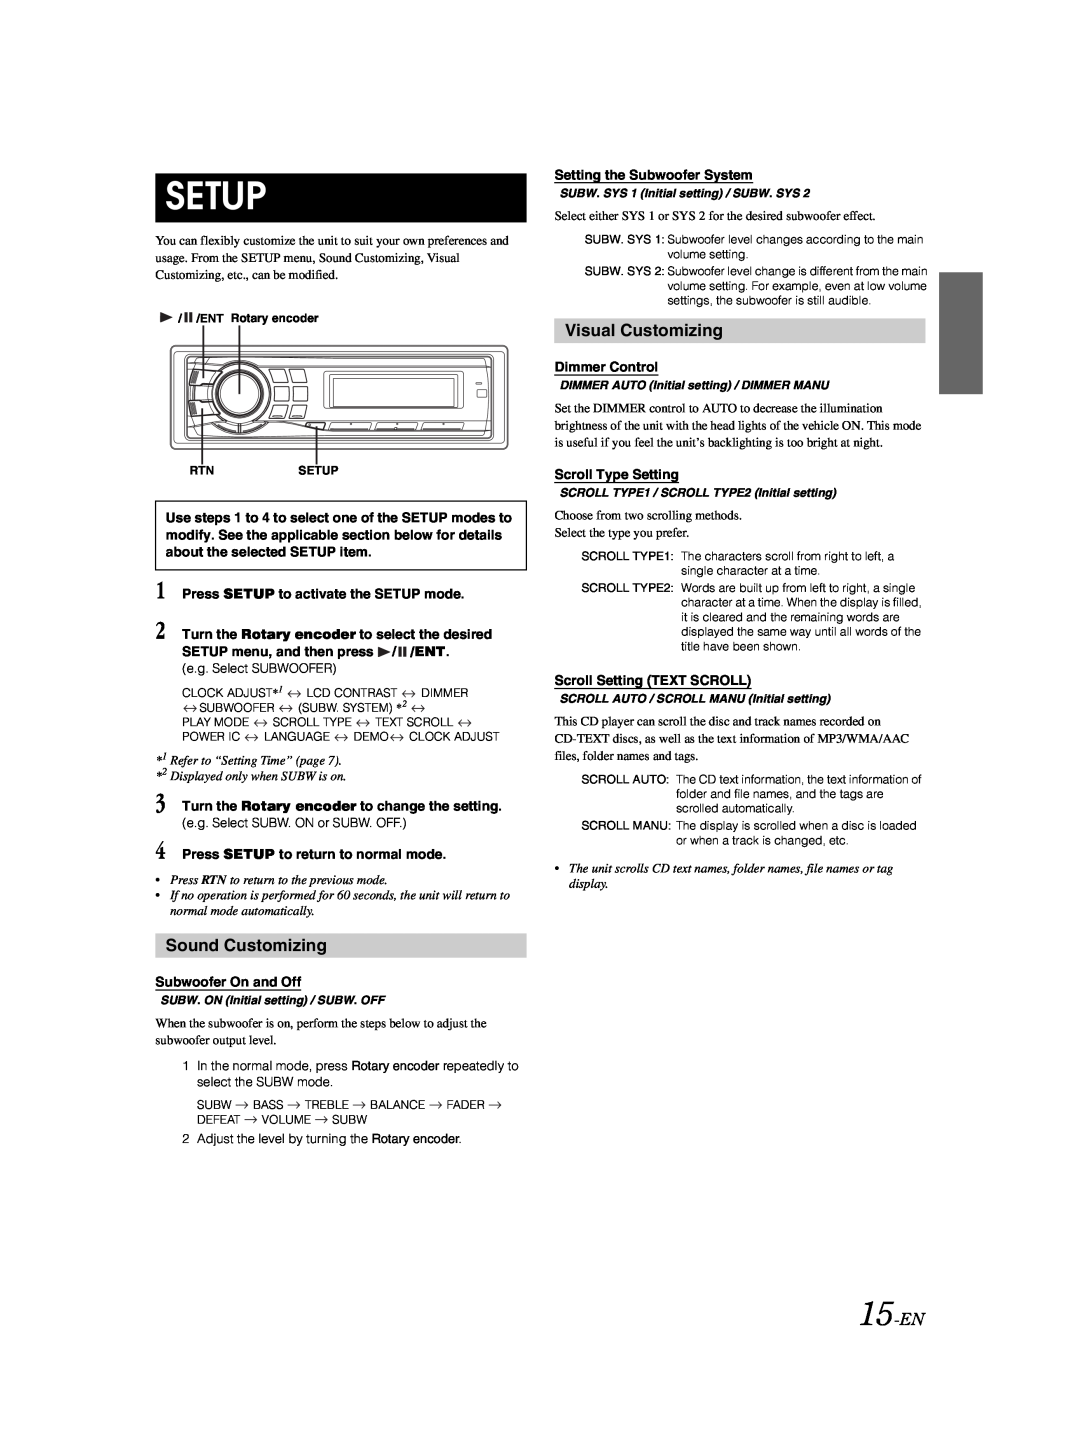 Alpine CDE-9881 owner manual Setup, Sound Customizing, Visual Customizing, 15-EN 